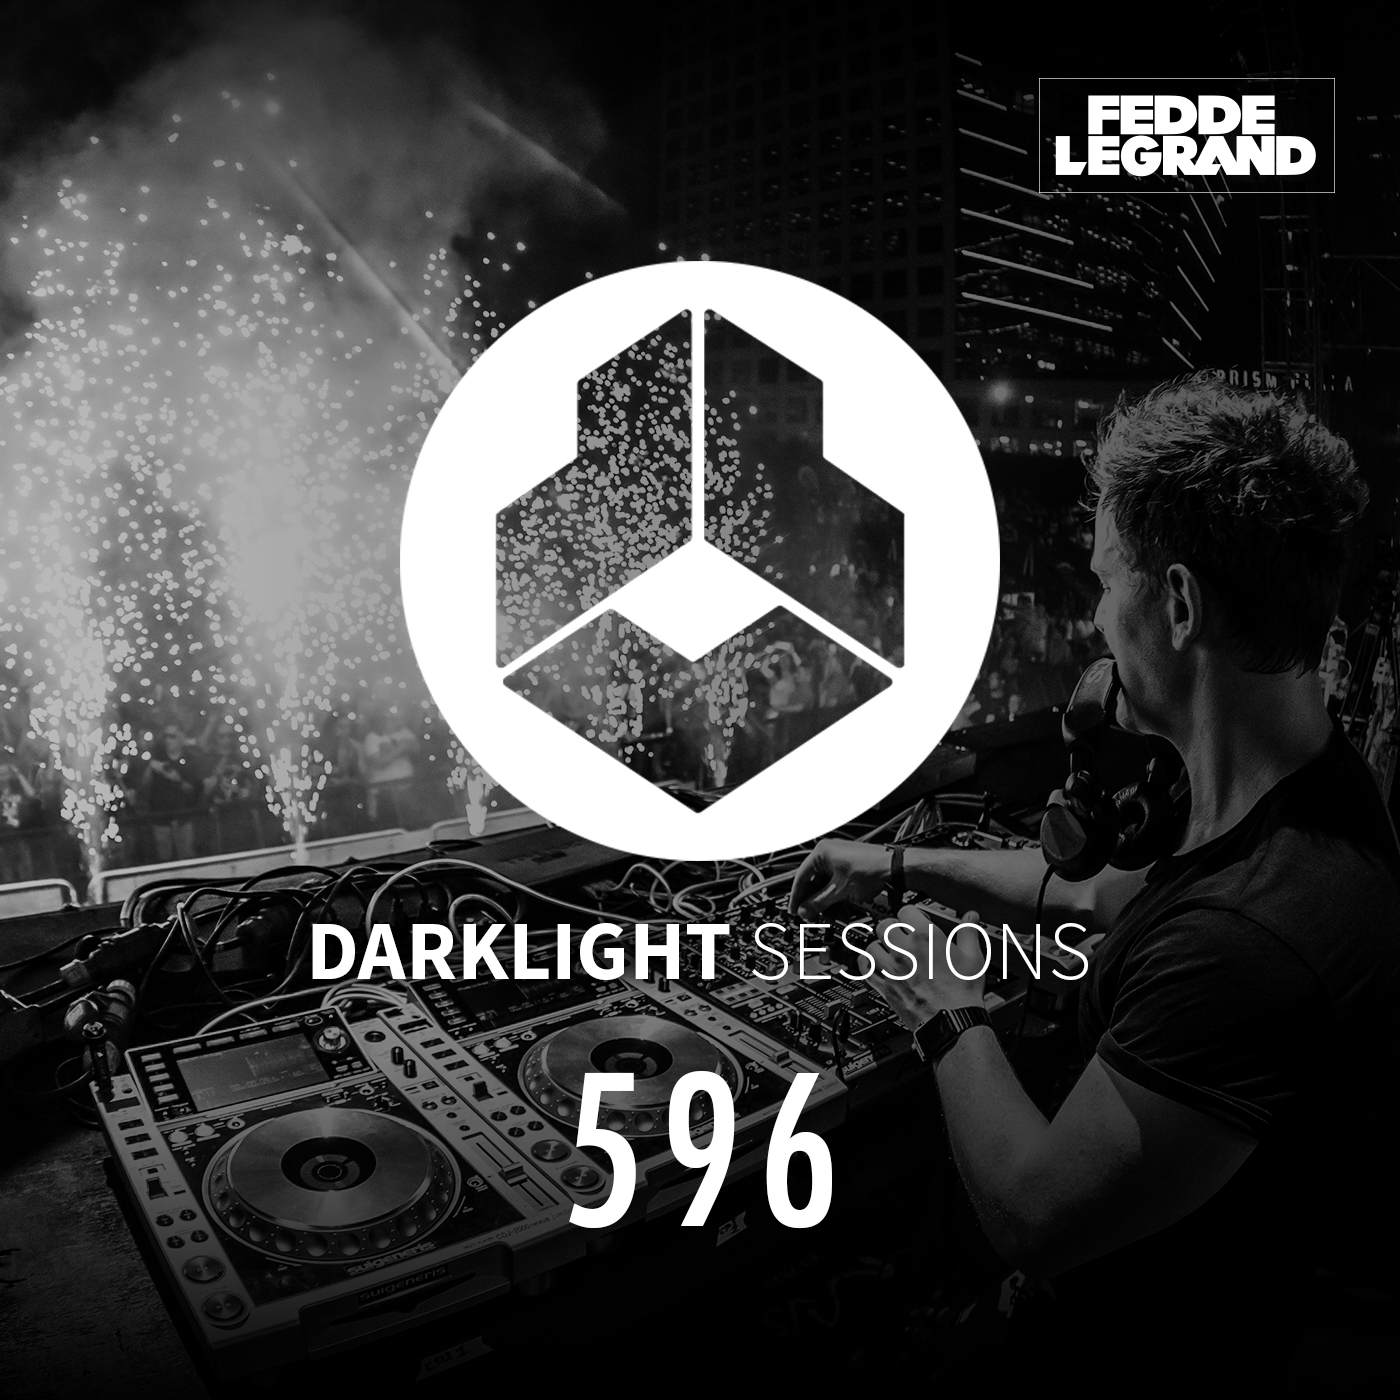 Darklight Sessions 596